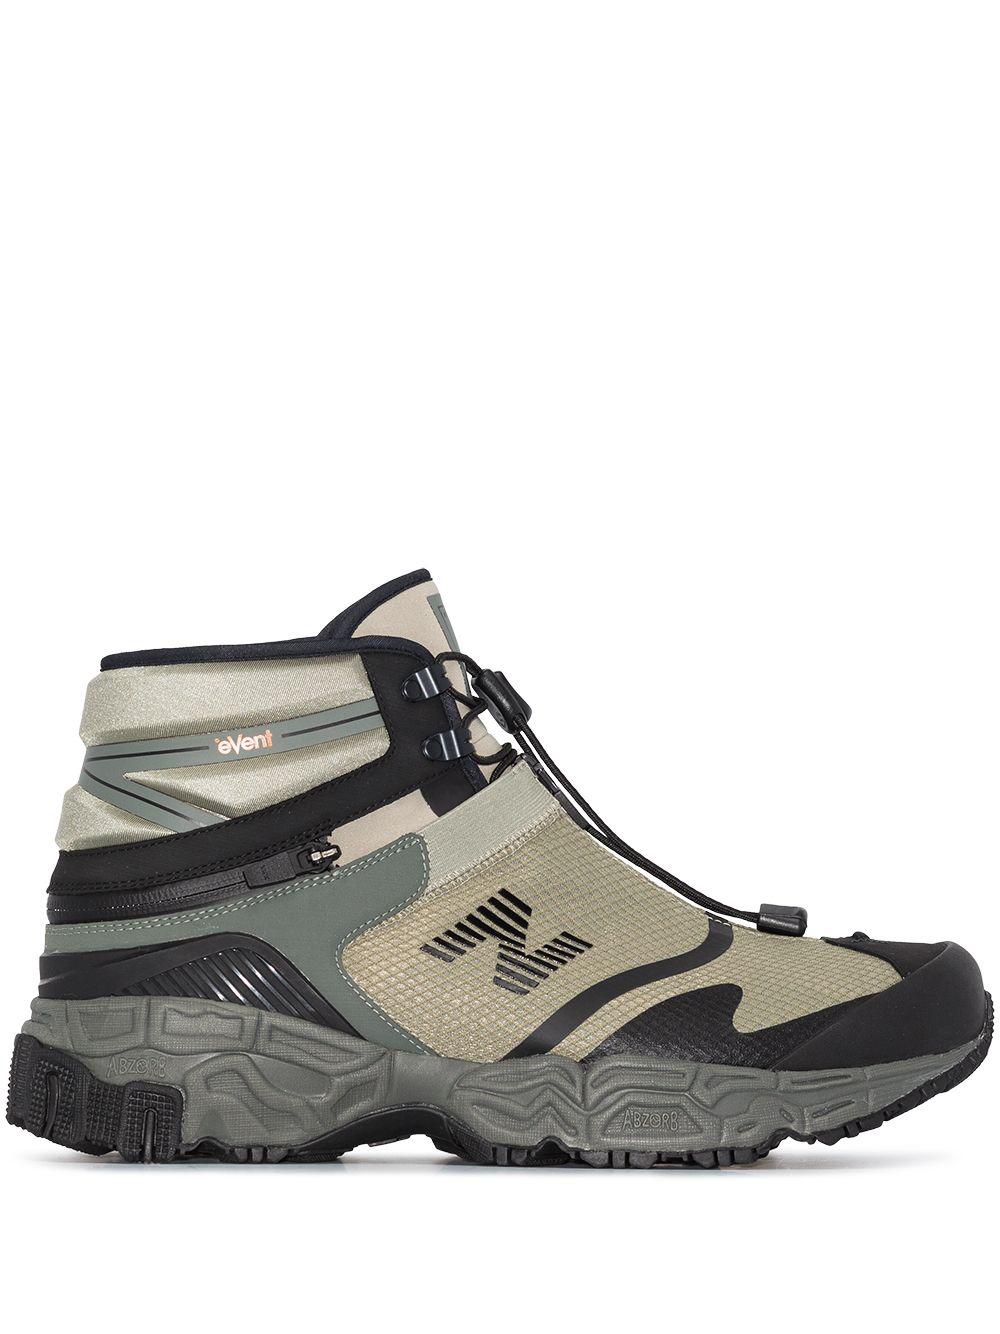 New Balance X Snow Peak Brown Tds Niobium Concept 1 Boots in Green 